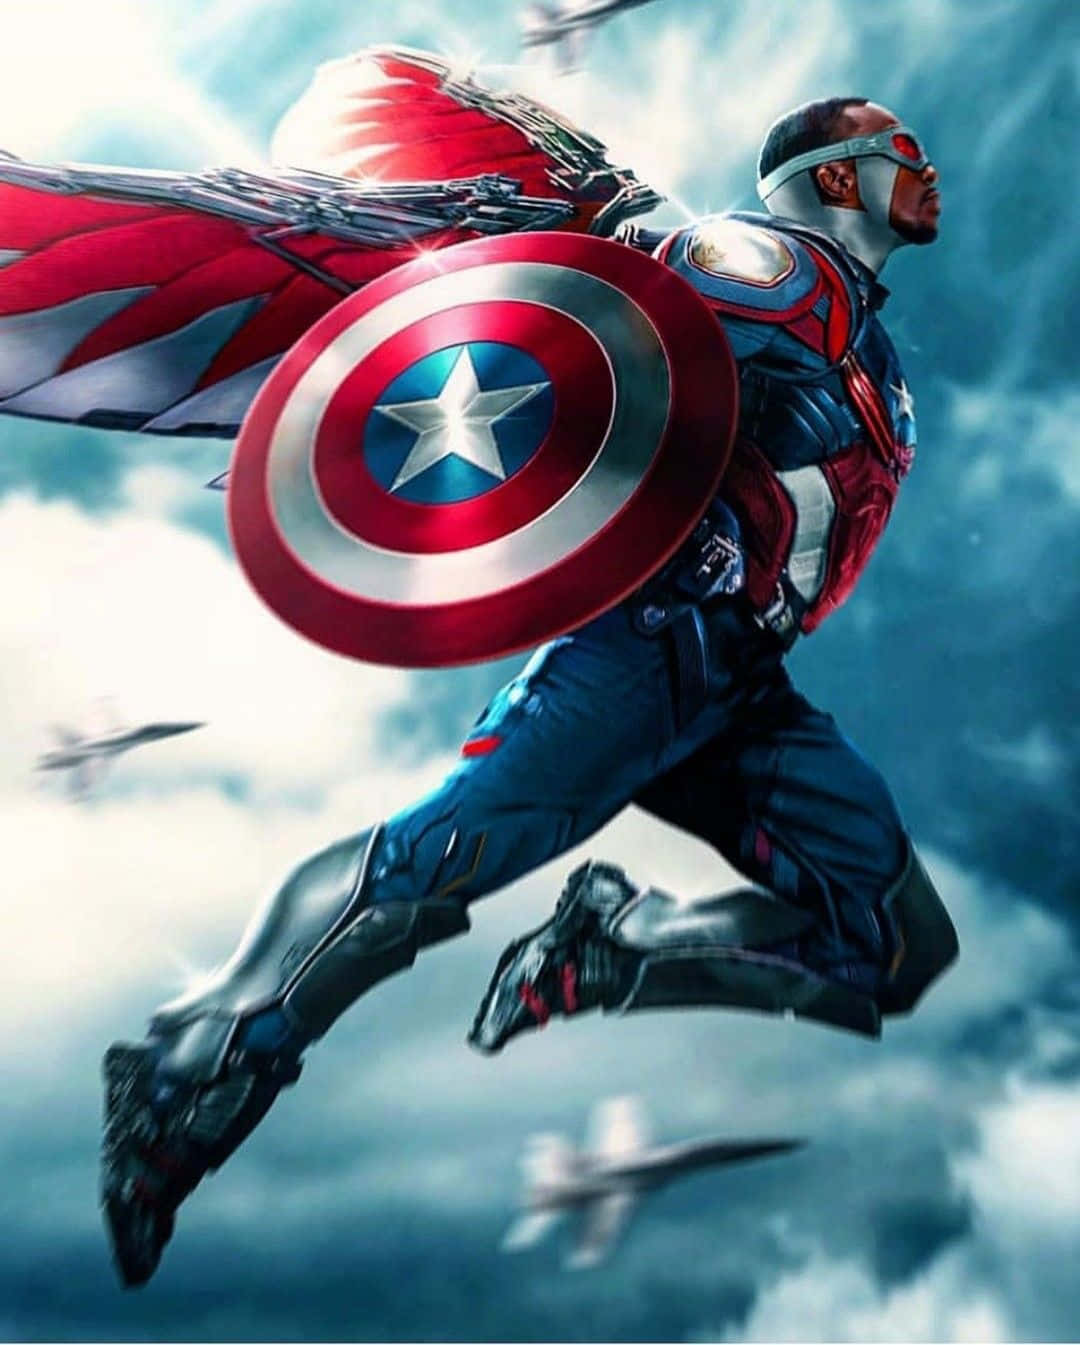 Sam Wilson, The Falcon, soars into the Avengers. Wallpaper